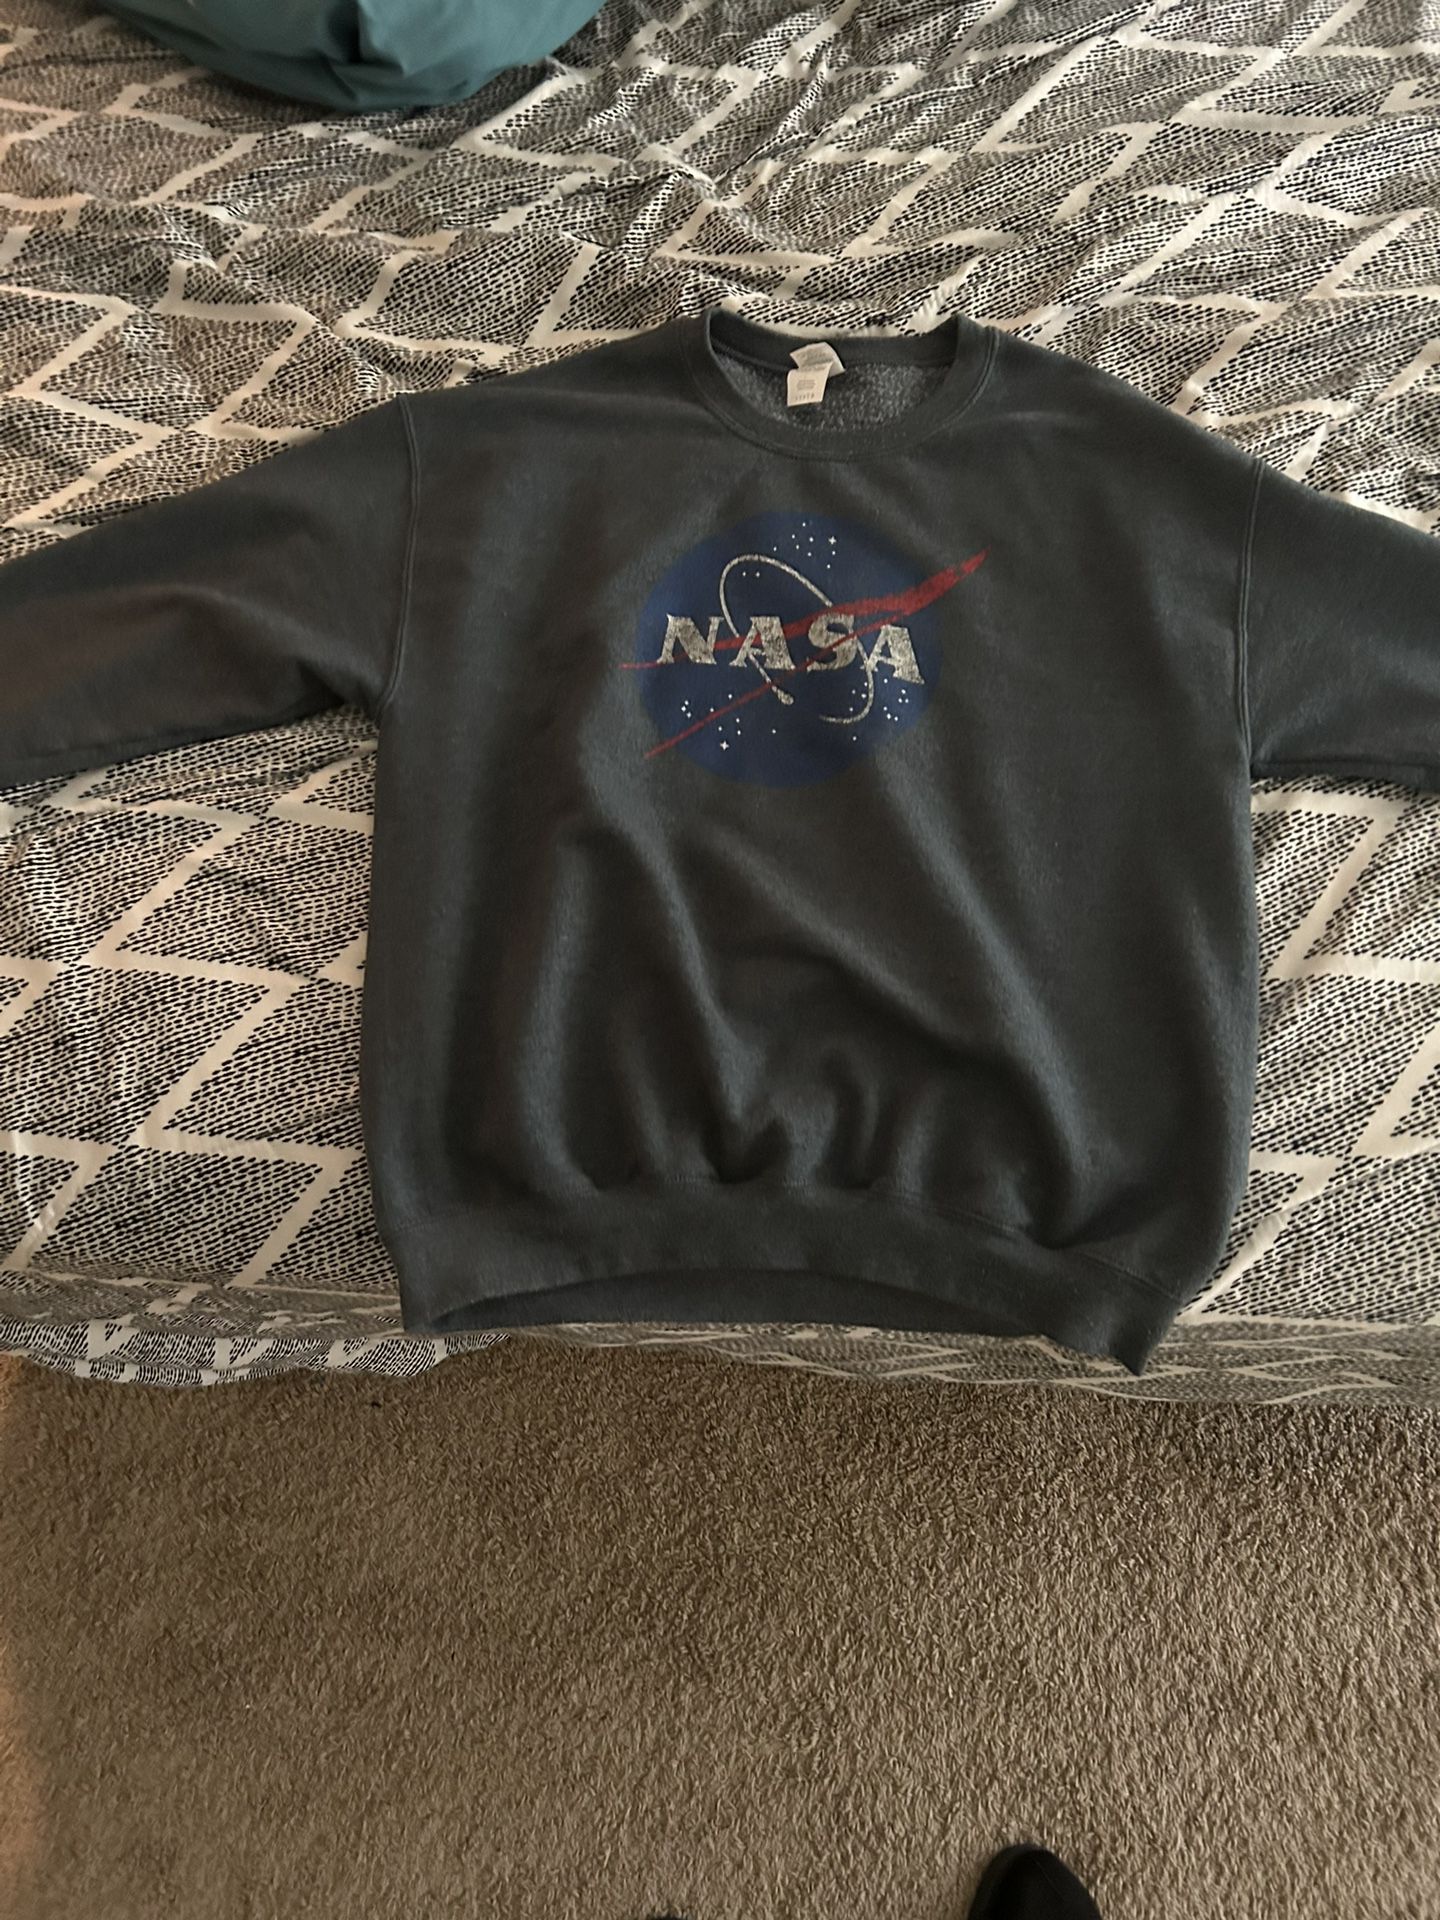 NASA Sweatshirt